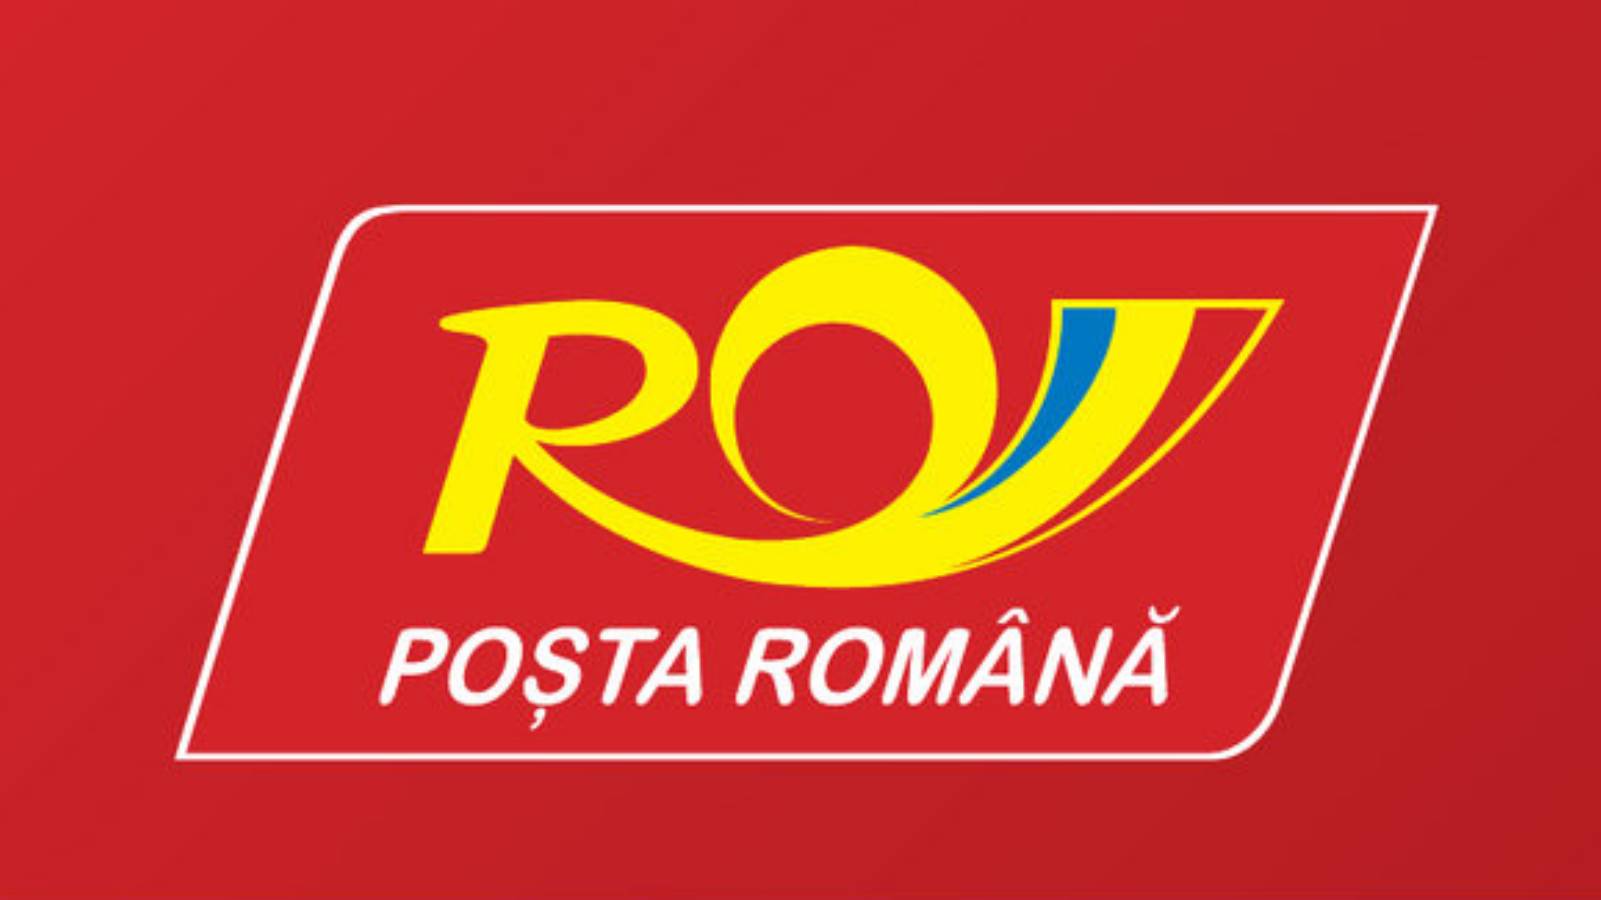 Stato postale rumeno aeo Romania